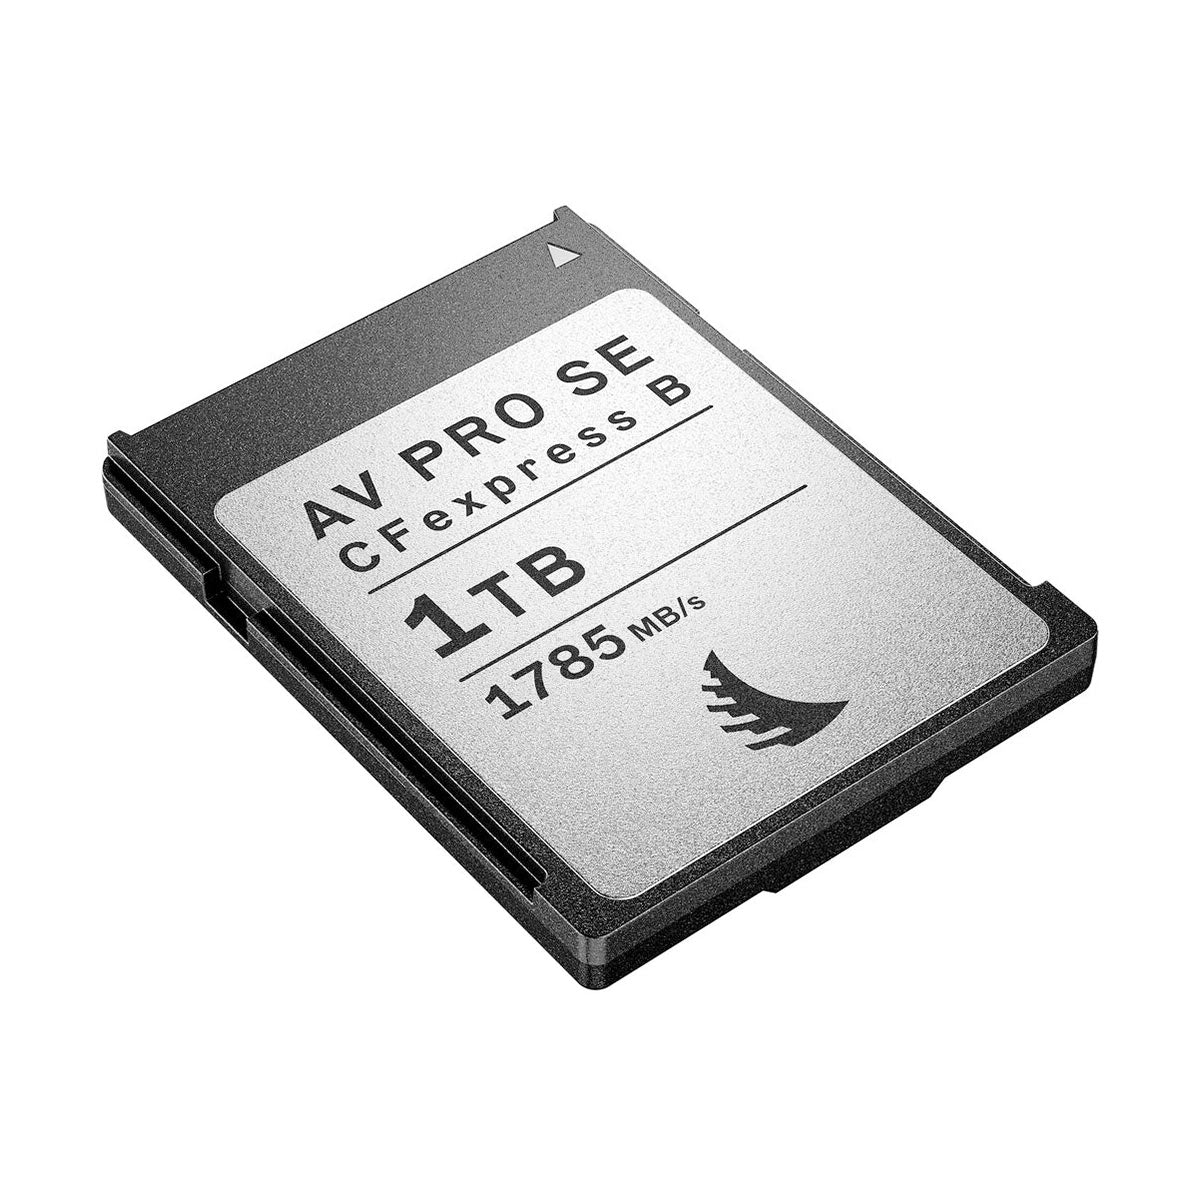 Angelbird 1TB AV Pro CFexpress 2.0 Type B SE Memory Card